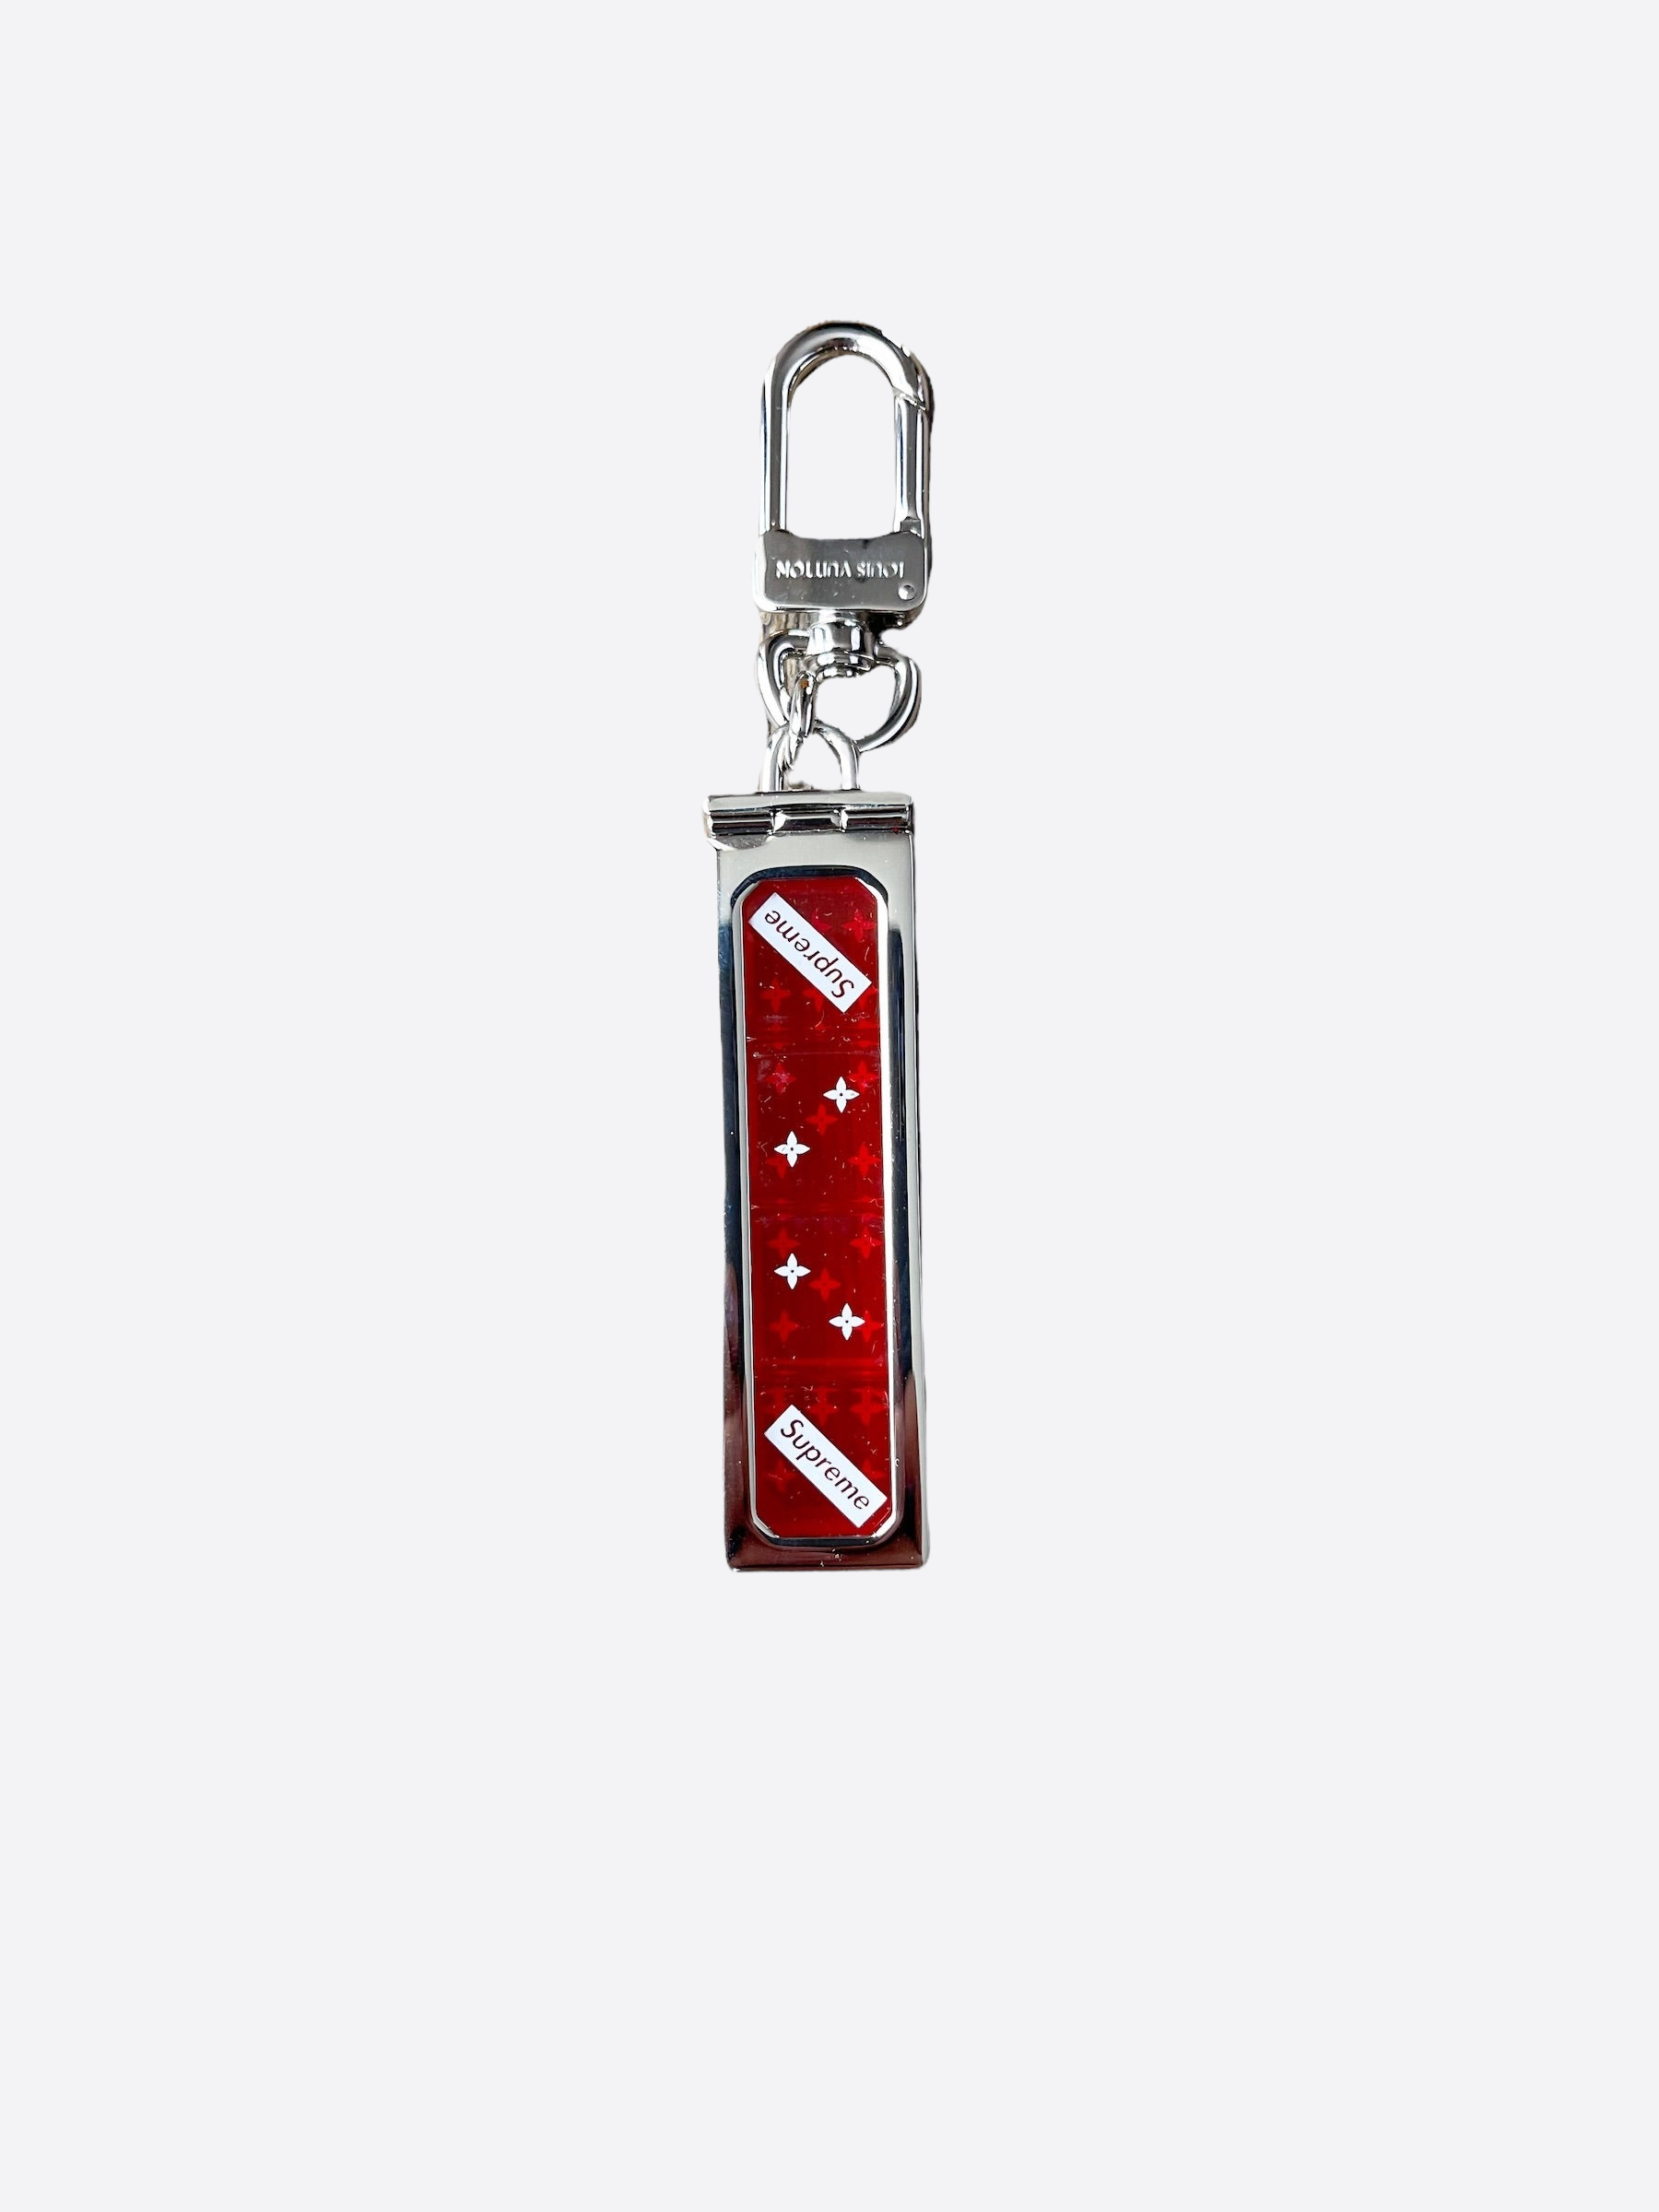 Louis Vuitton x Supreme Dice Keychain - Silver Keychains, Accessories -  LOUSU20304